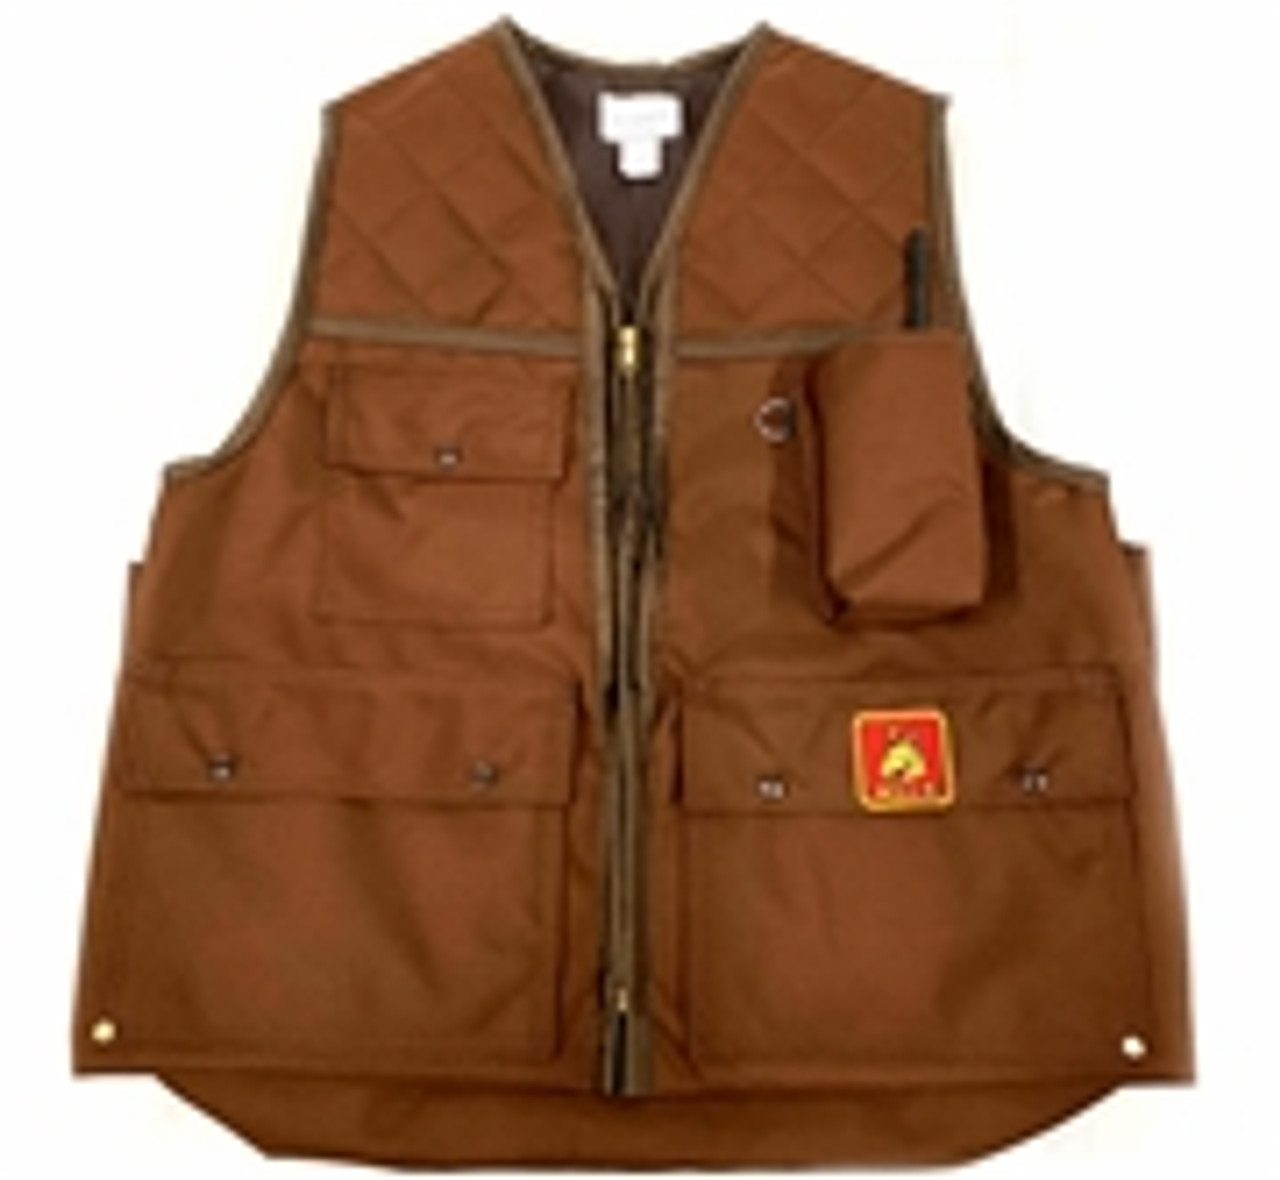 mule front load game vest with remote inside gear pocket at okie dog supply